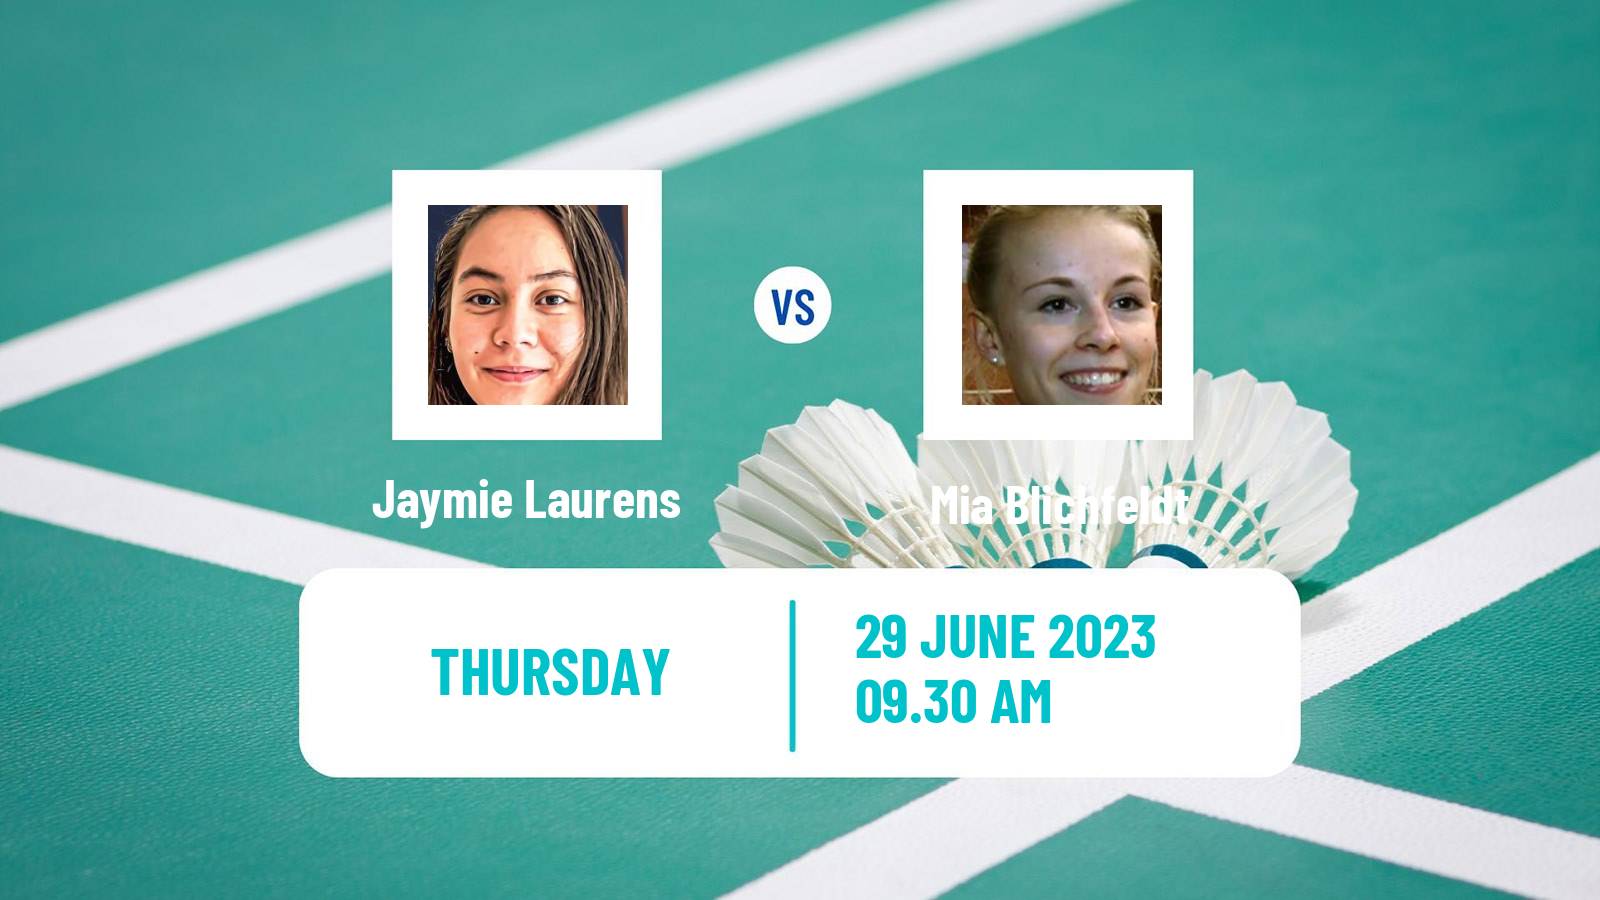 Badminton BWF European Games Women Jaymie Laurens - Mia Blichfeldt